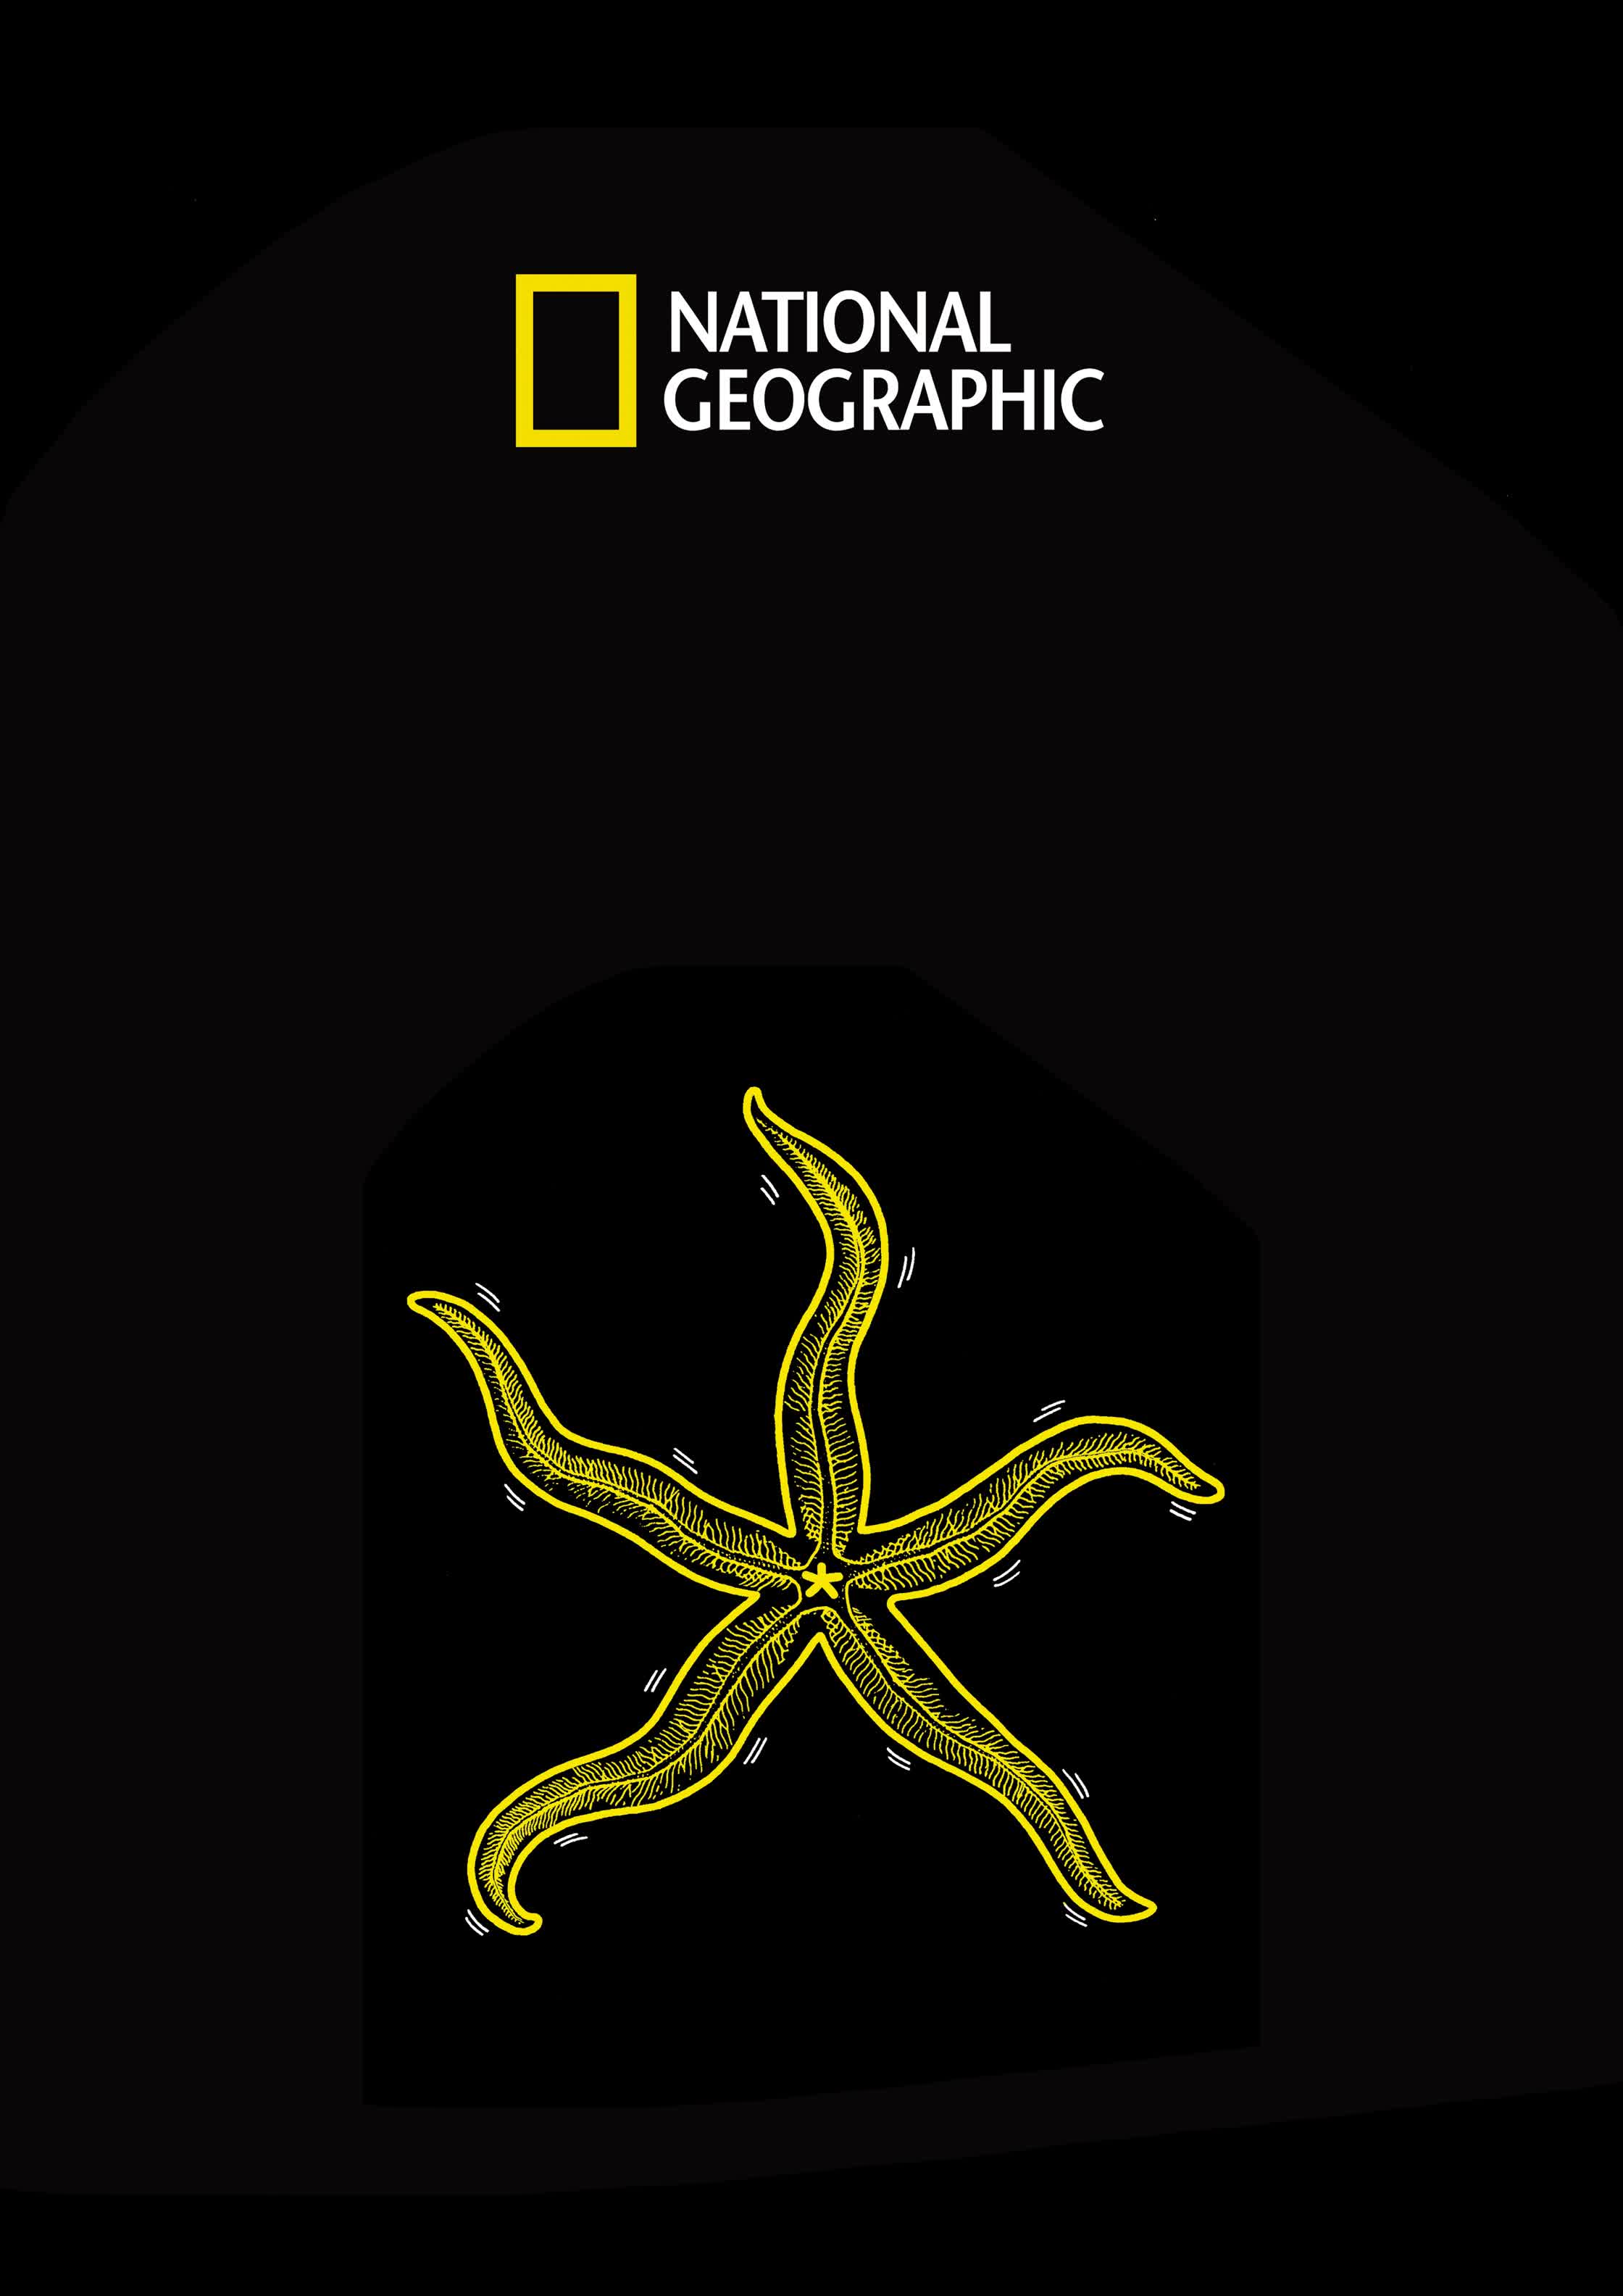 National Geographic Press ads - Starfish.jpg